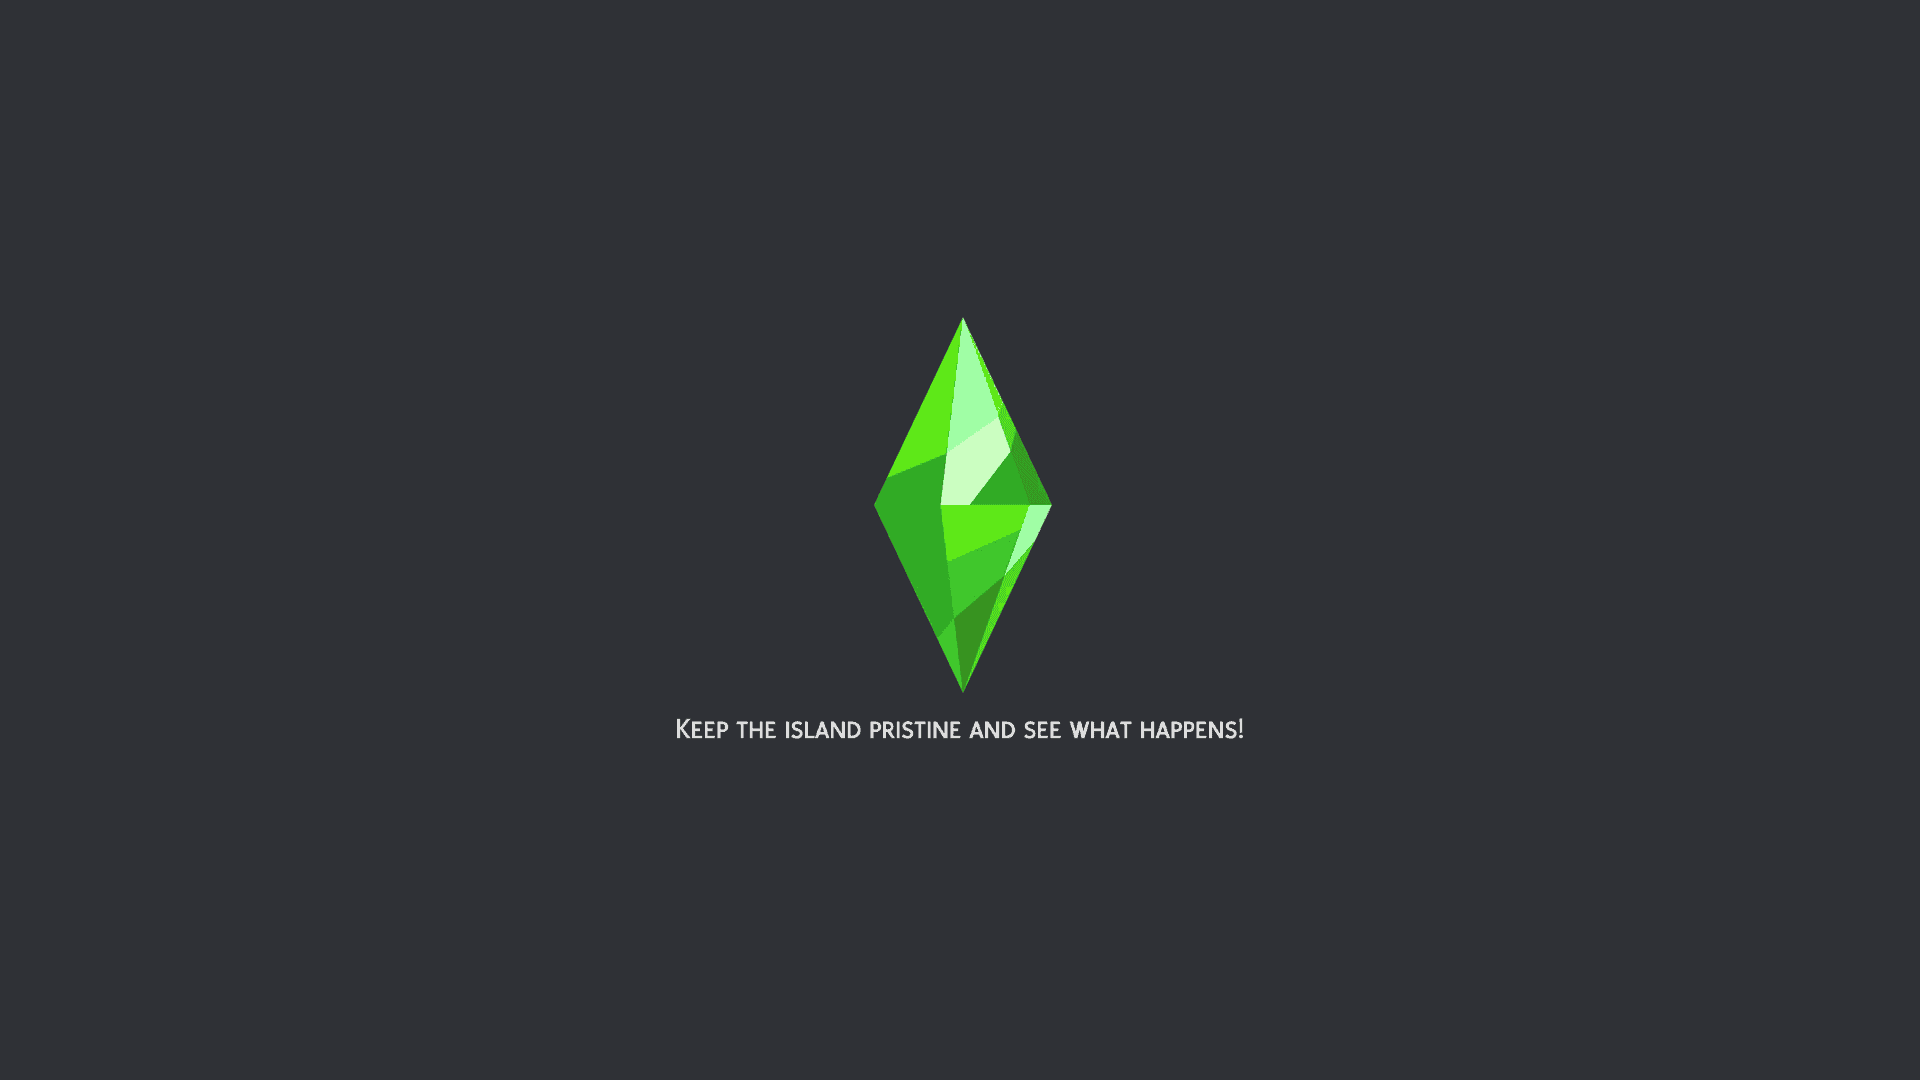 Sims 4 loading screen